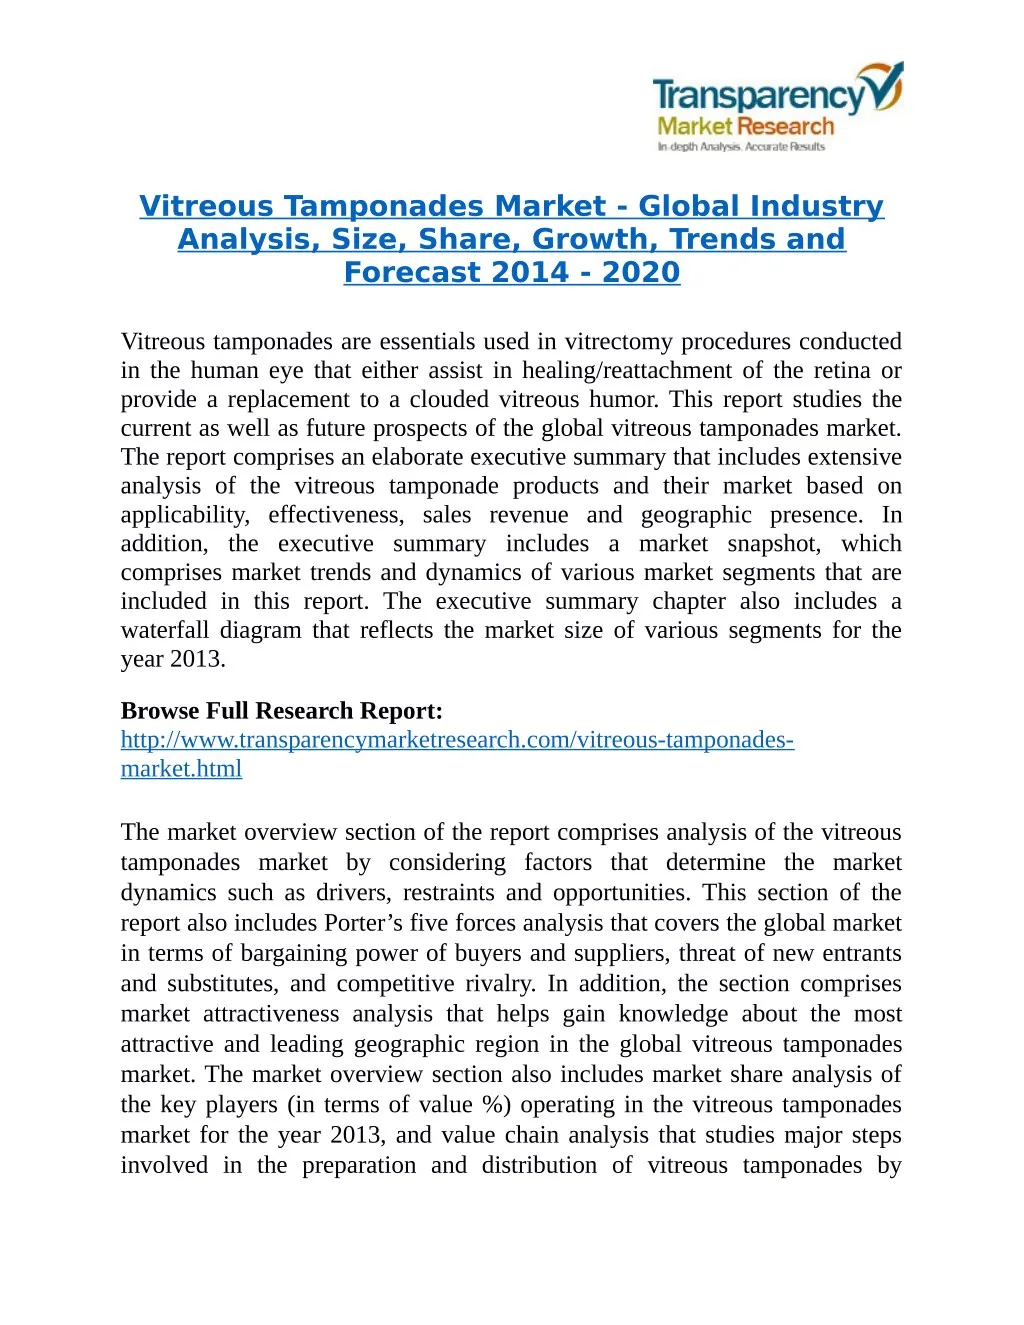 vitreous tamponades market global industry